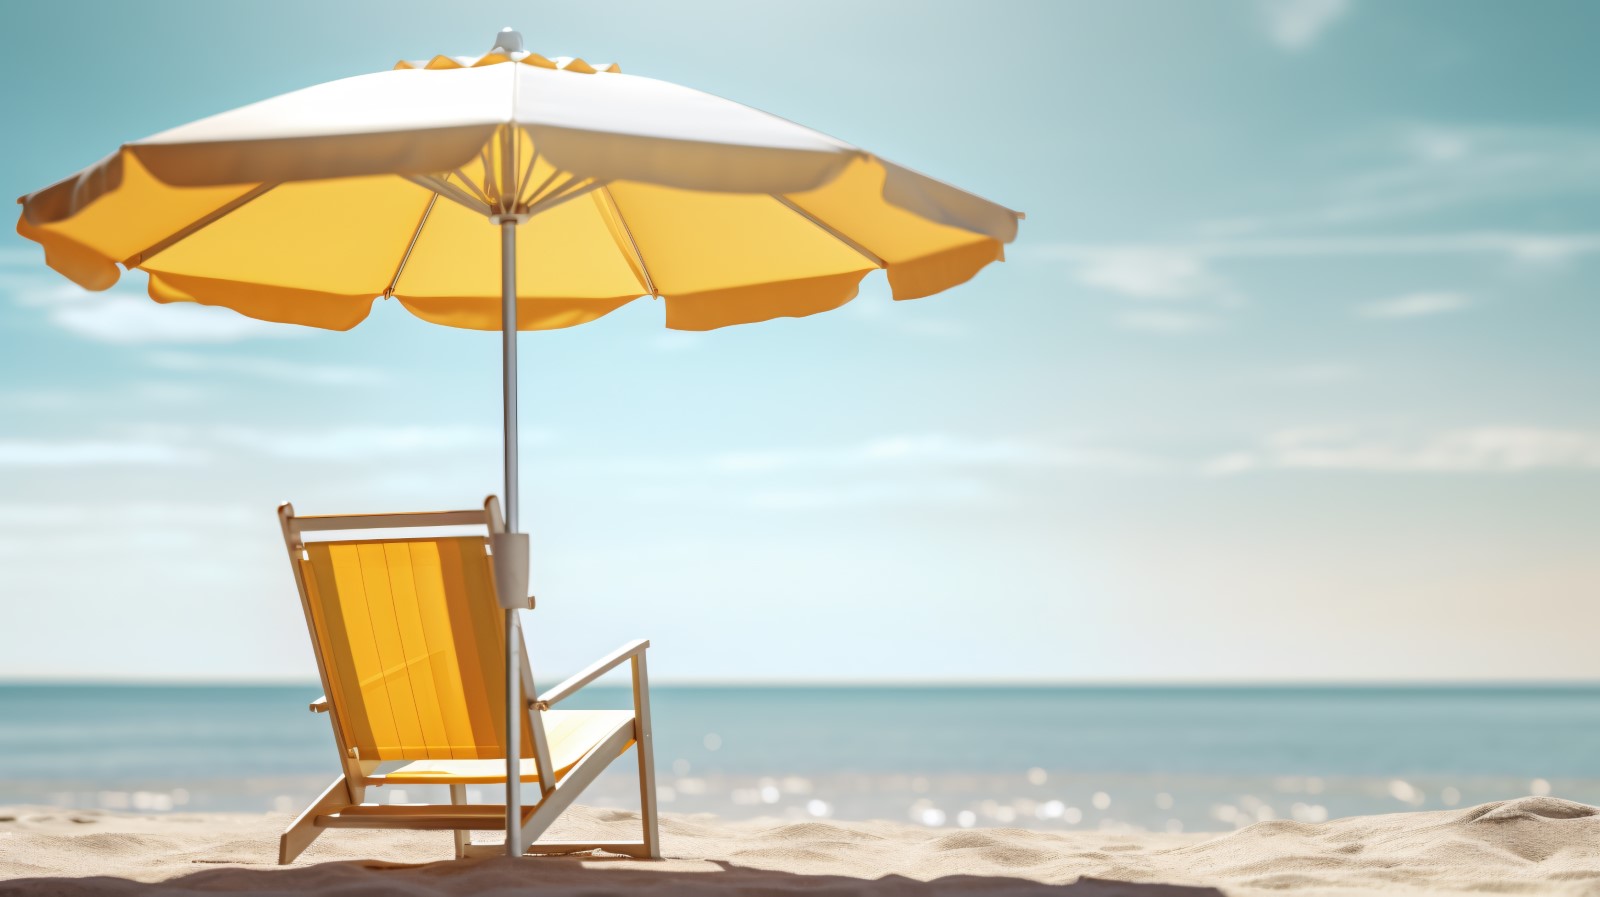 Beach summer Outdoor Beach chair with umbrella sunny day 242